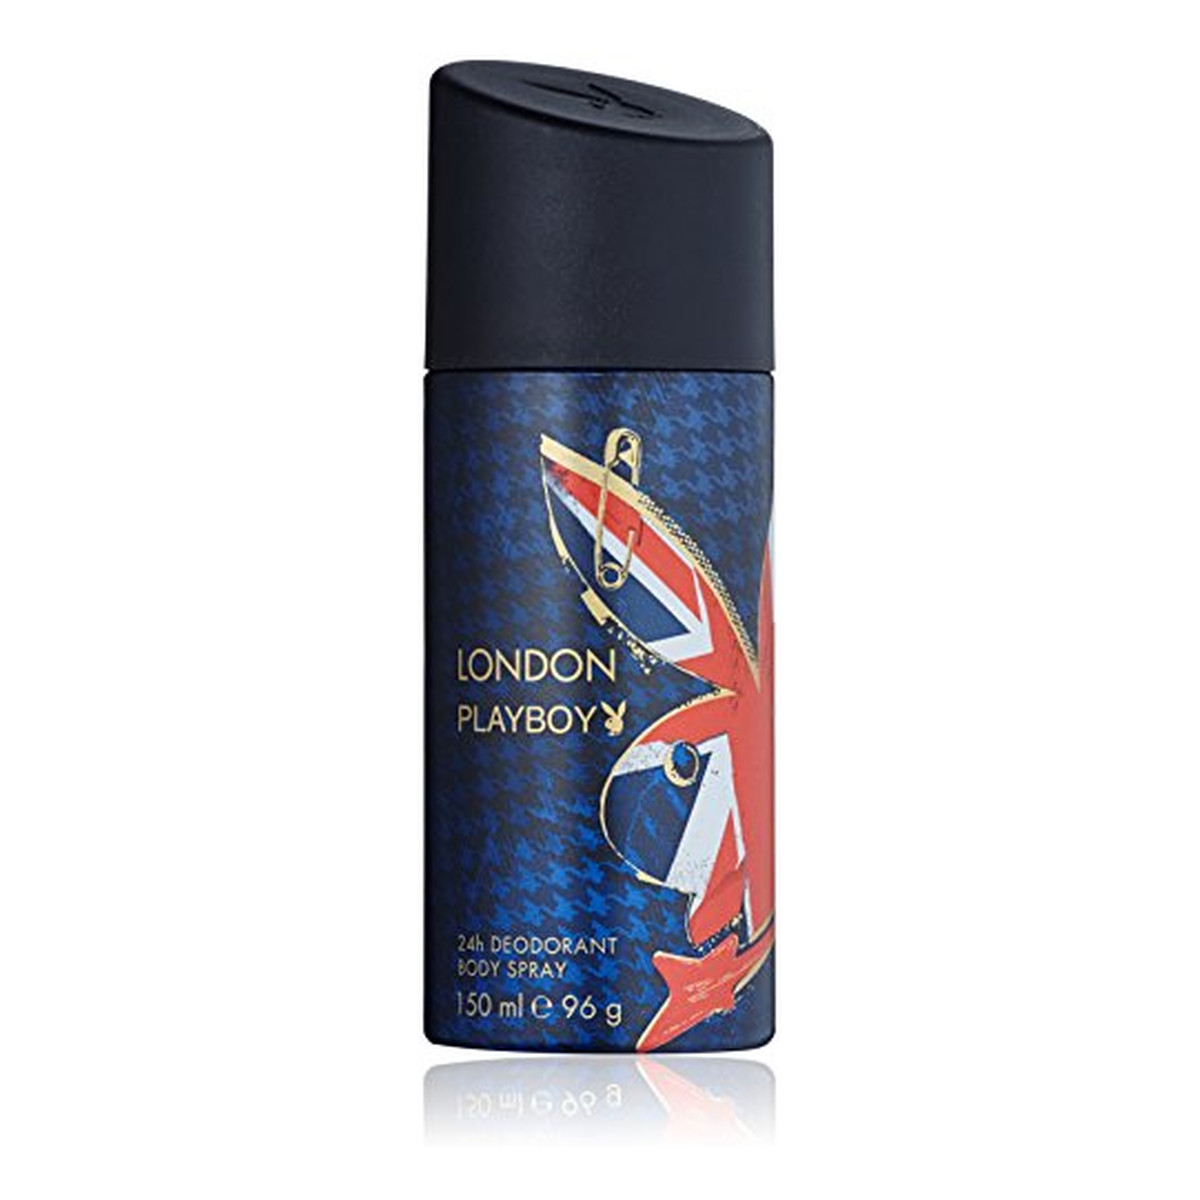 Playboy London Dezodorant spray 150ml